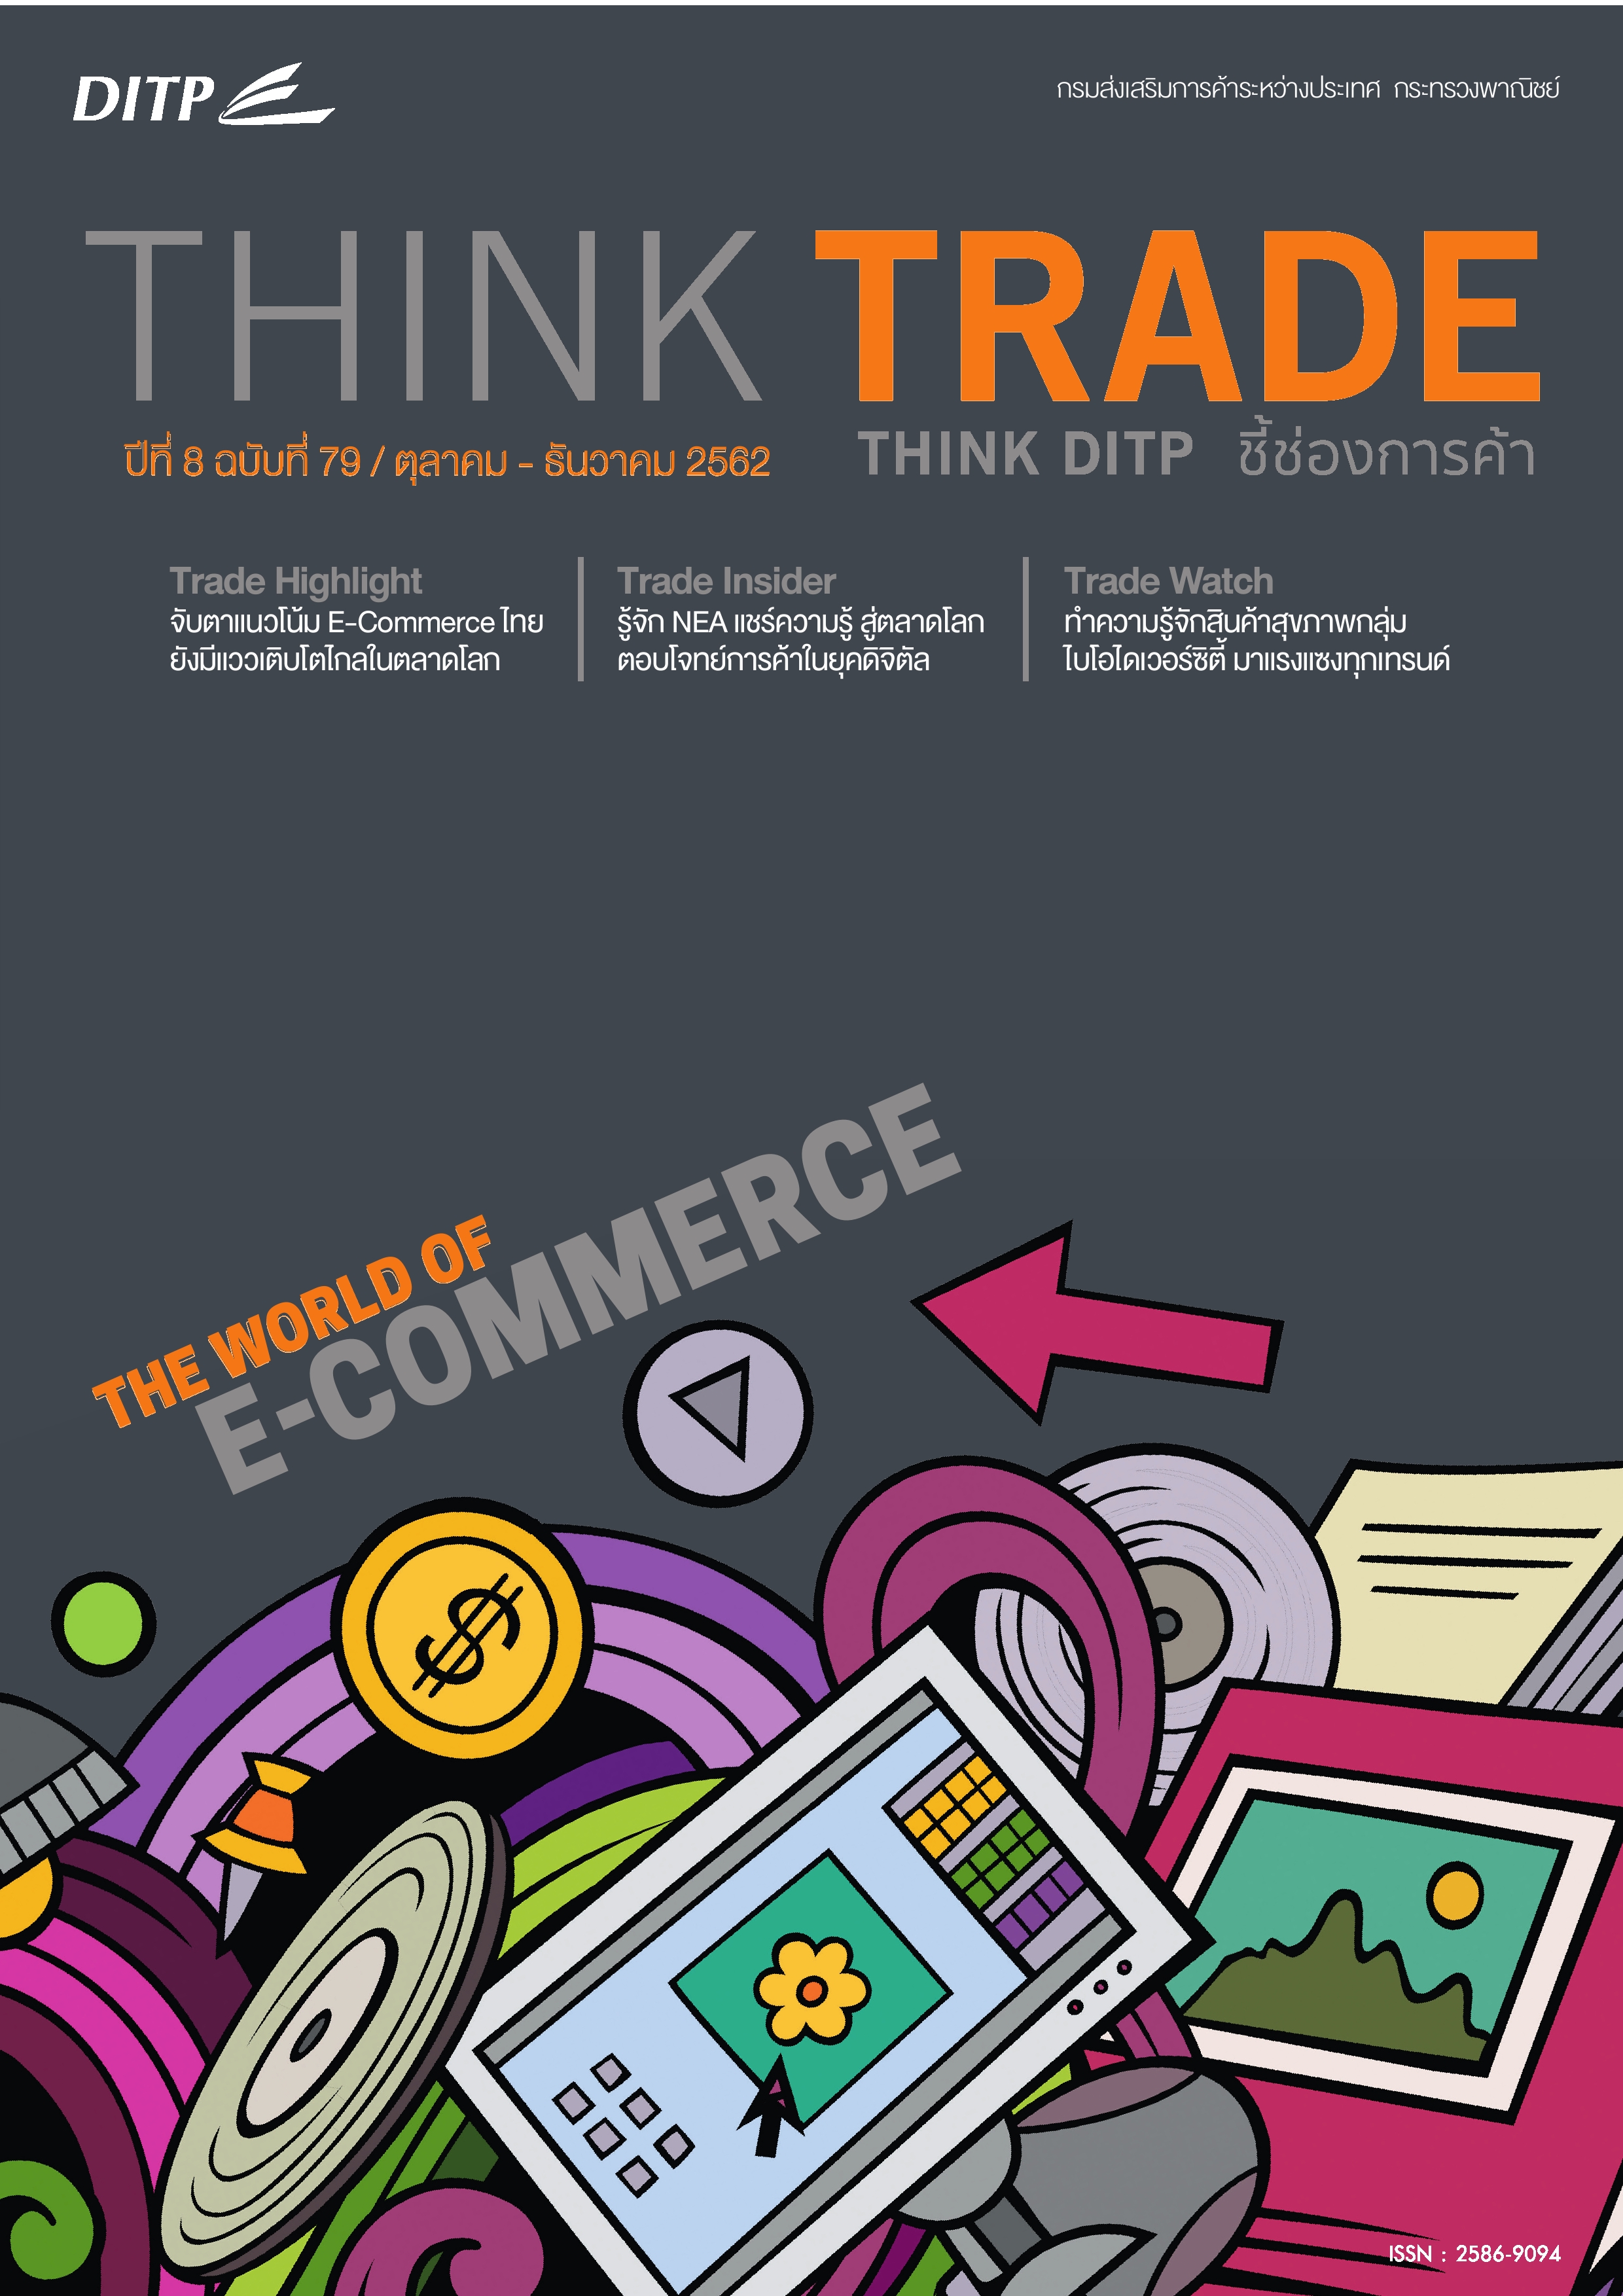 The World of E-Commerce